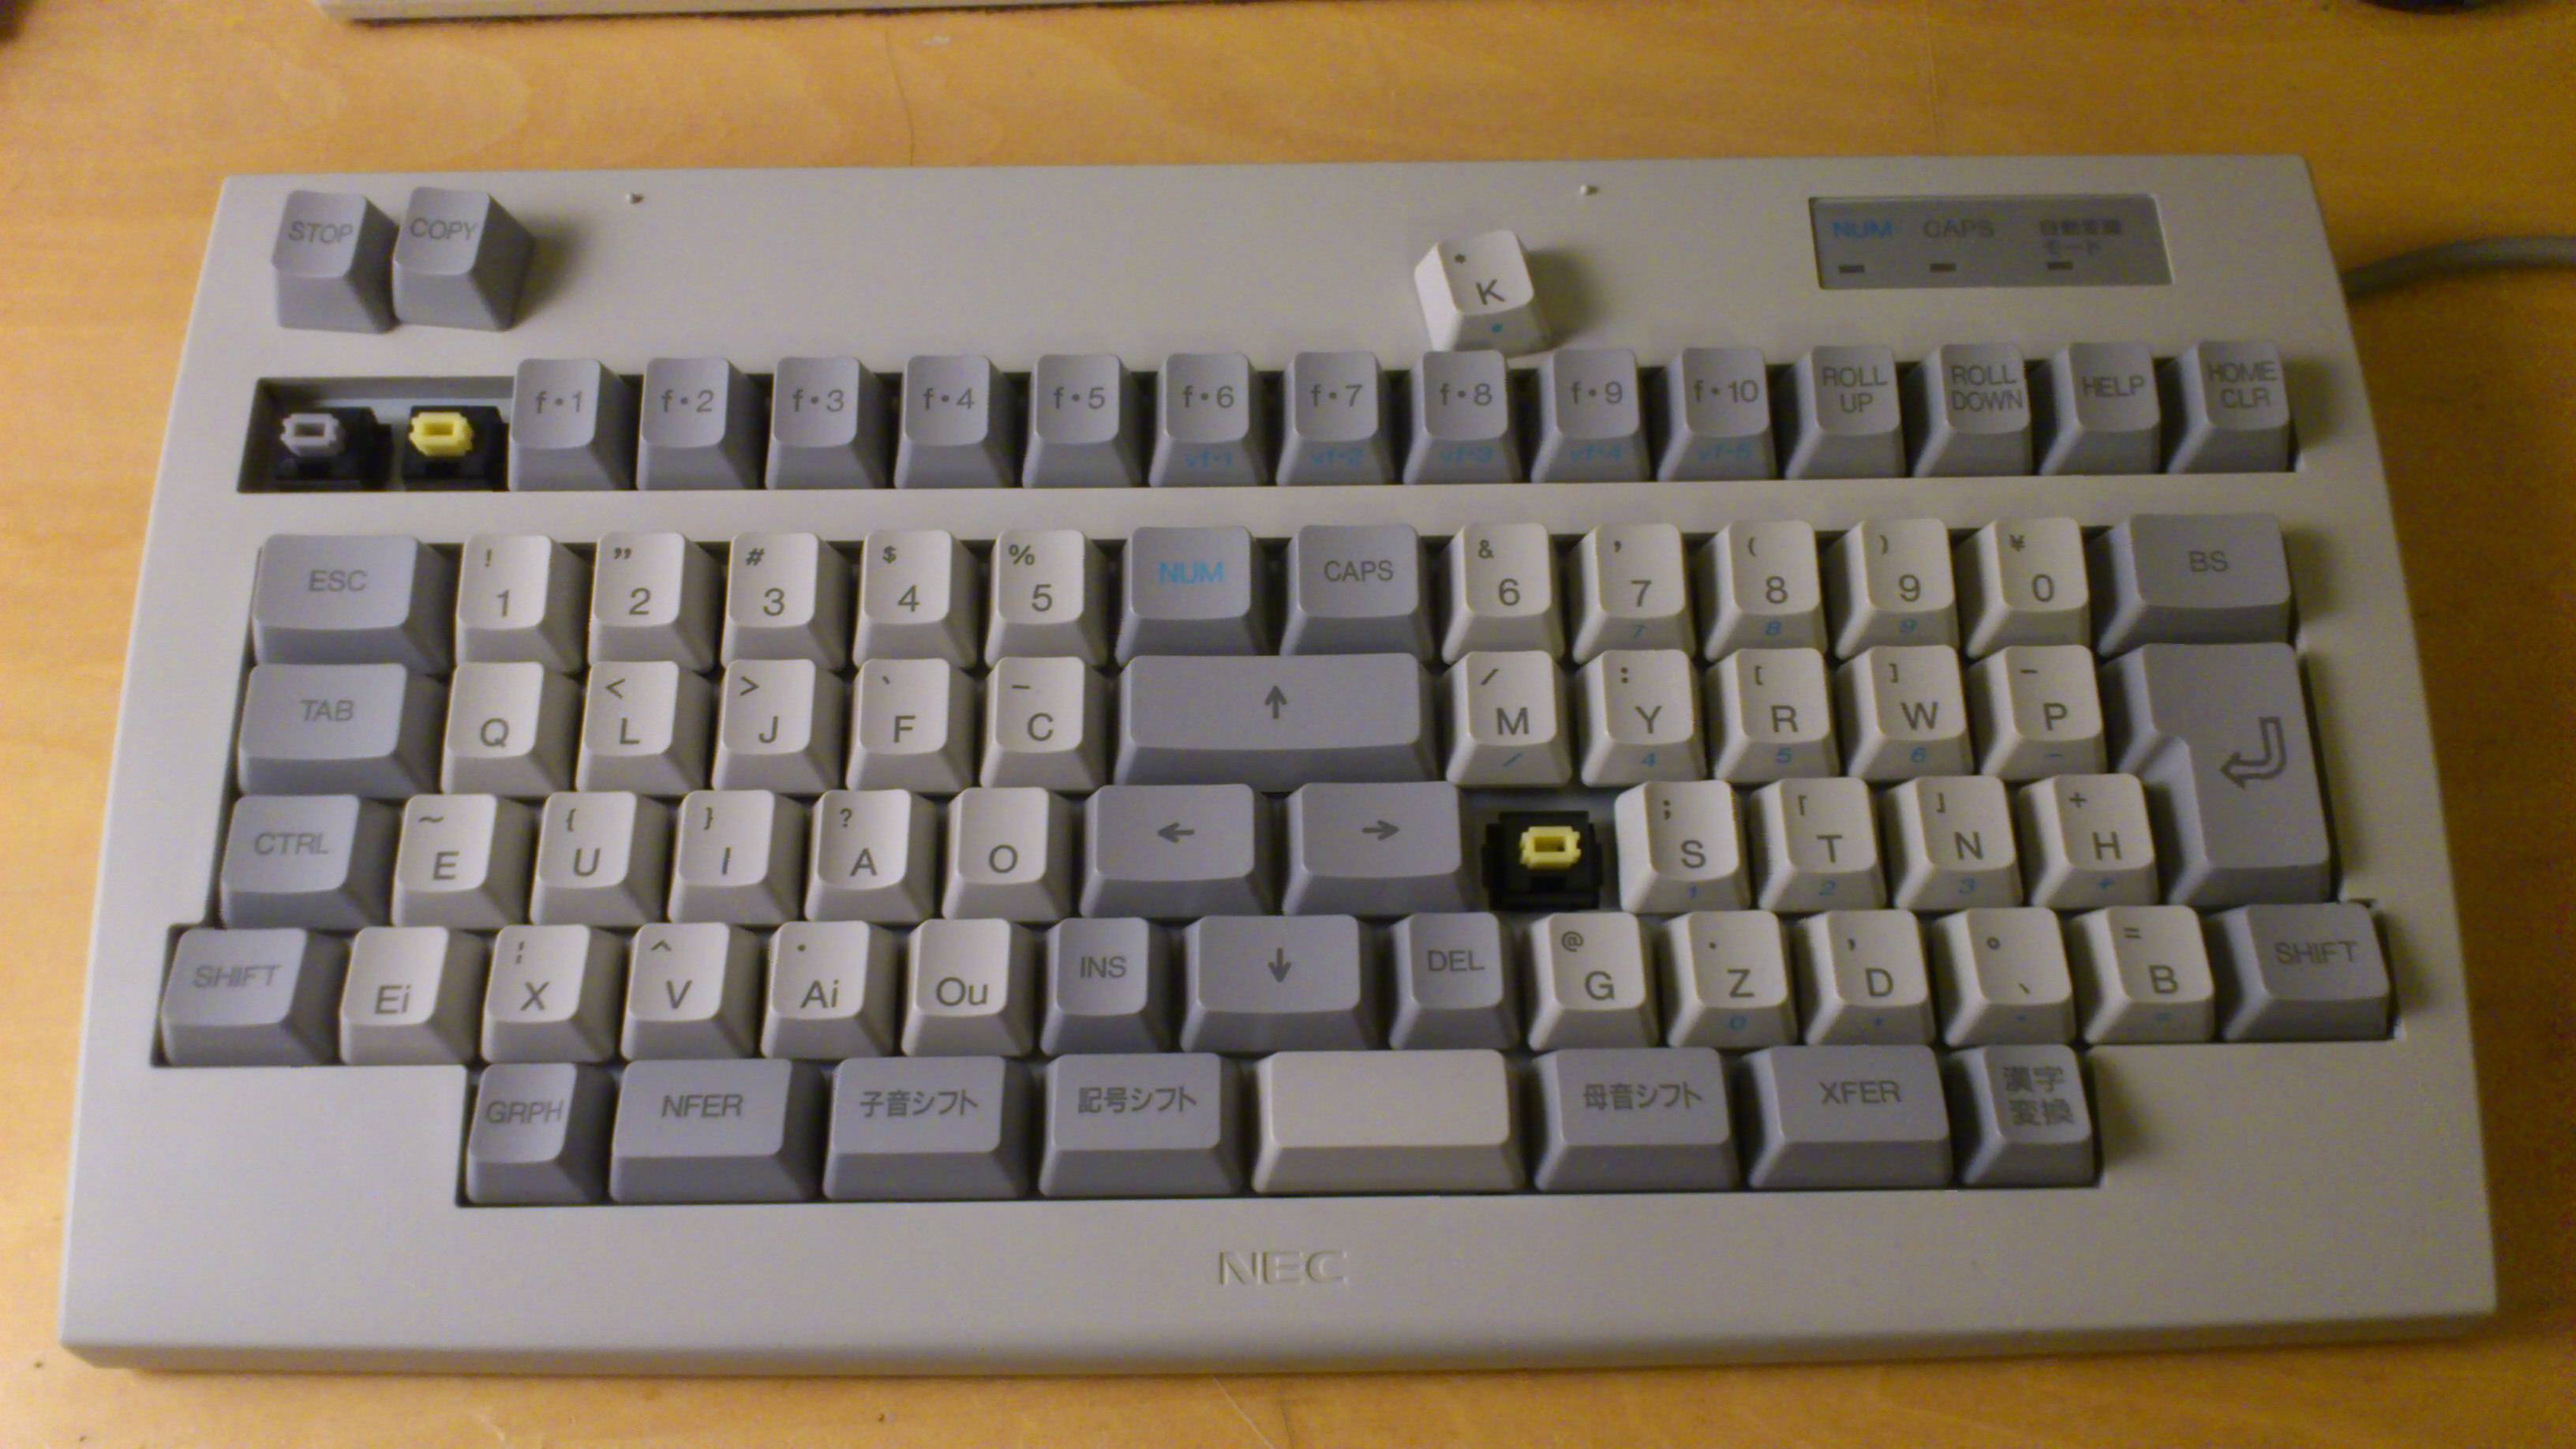 NEC PC-9801 Keyboard, 1992